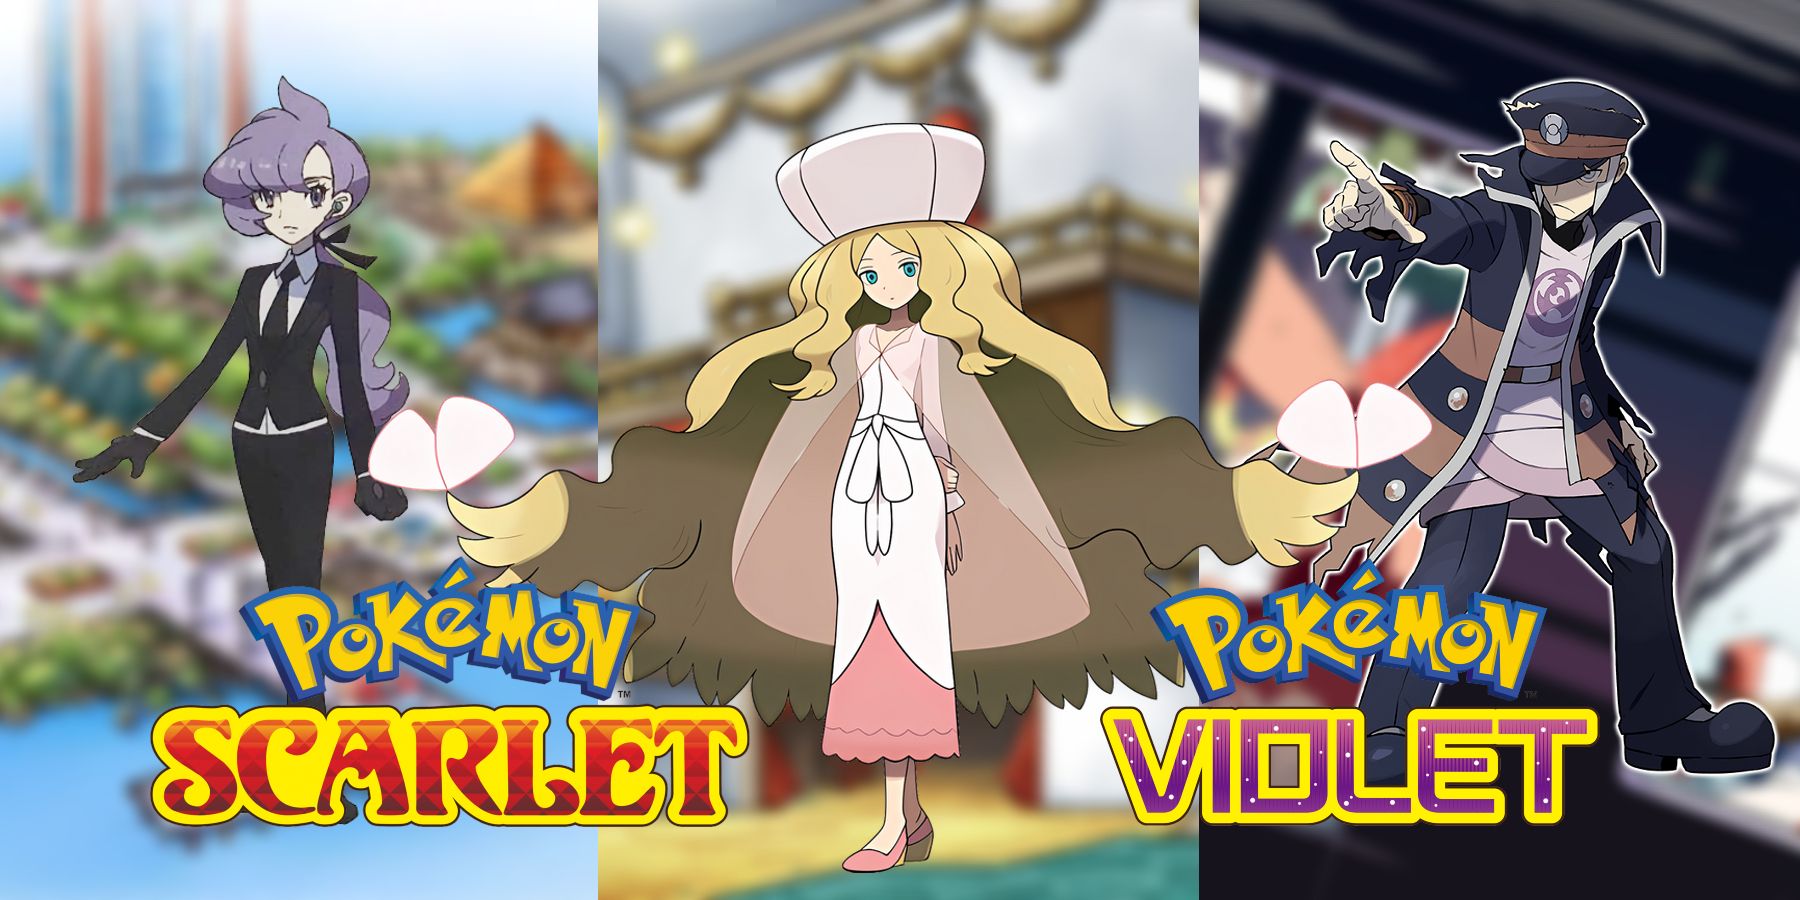 Pokémon Scarlet & Violet - New Characters